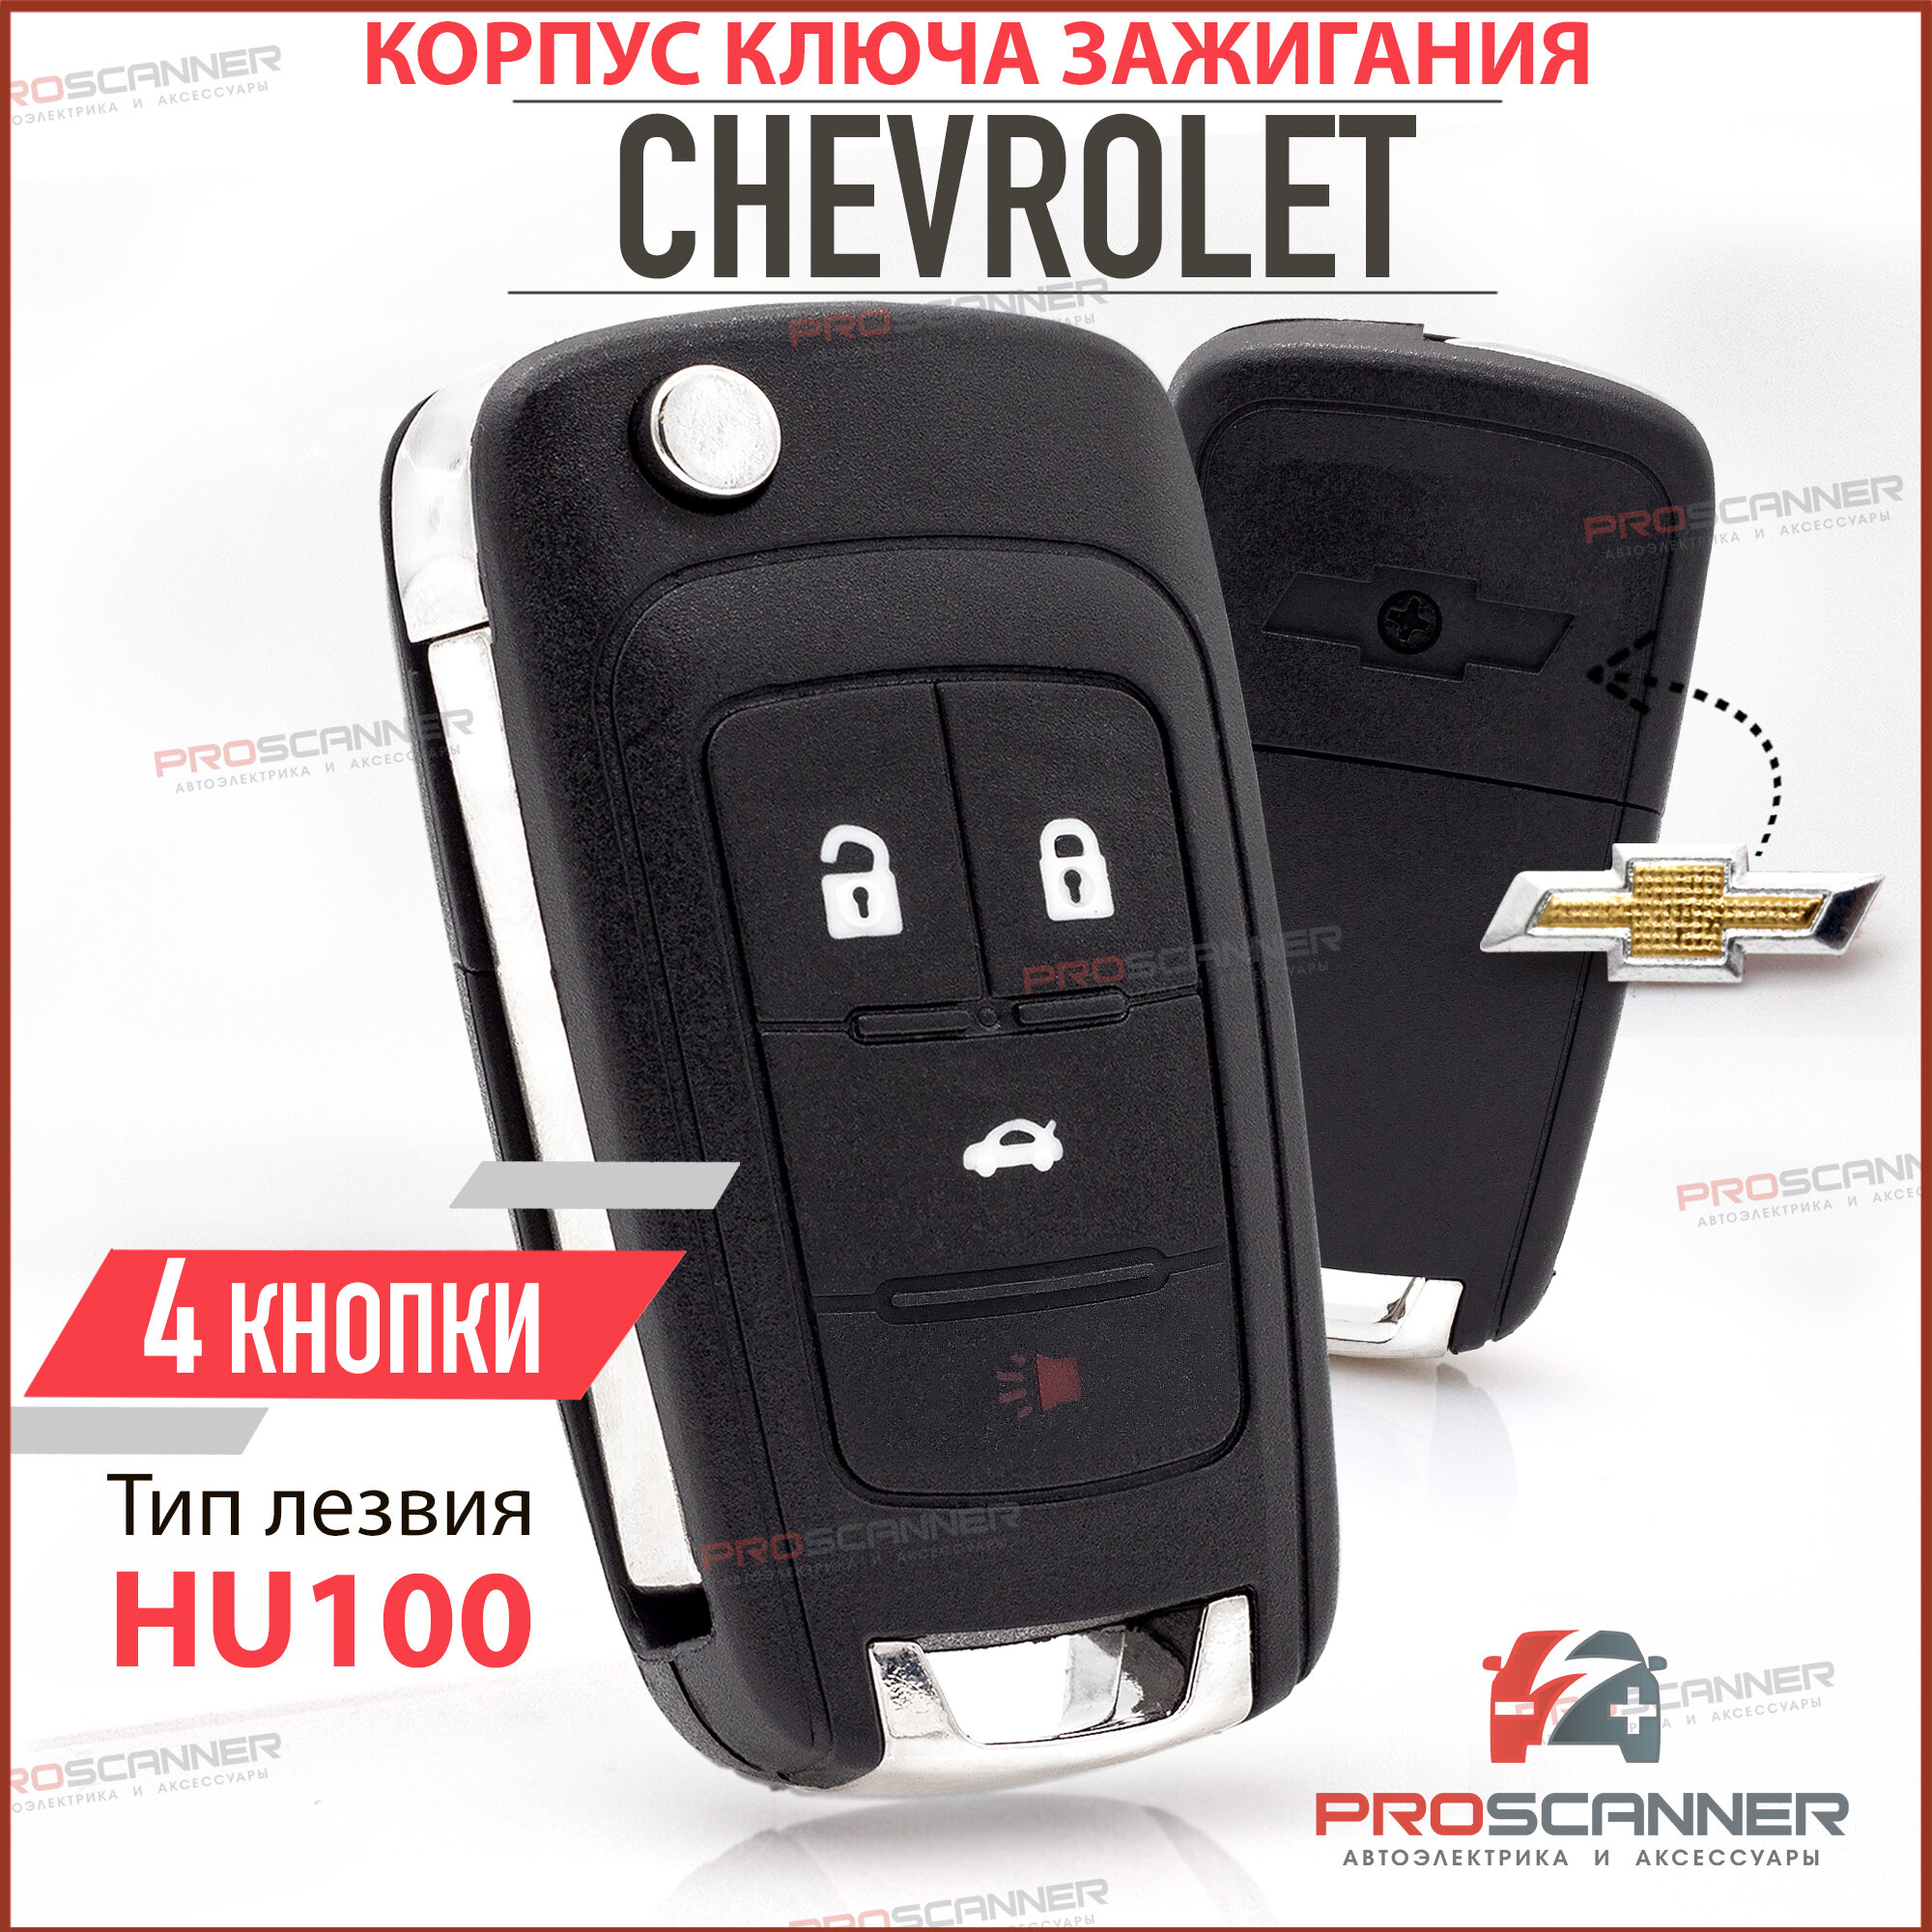 Корпус ключа зажигания для Chevrolet Cruze Aveo Orlando Шевроле / Круз Авео Орландо- 1 штука (4х кнопочный ключ лезвие HU100)